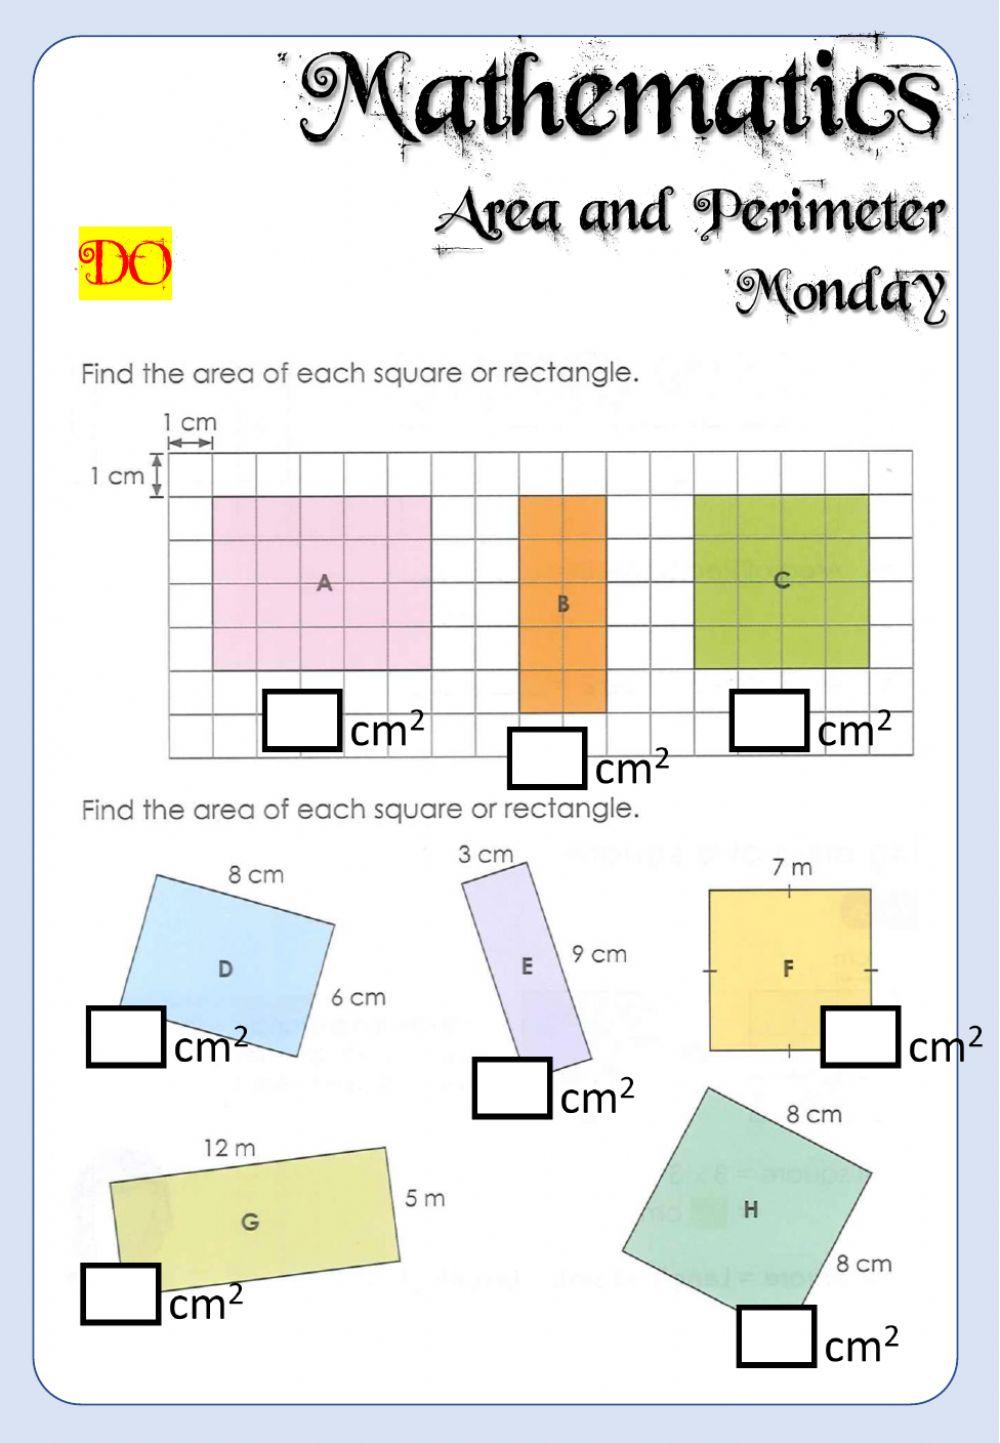 Week 21 - Math - Monday 6